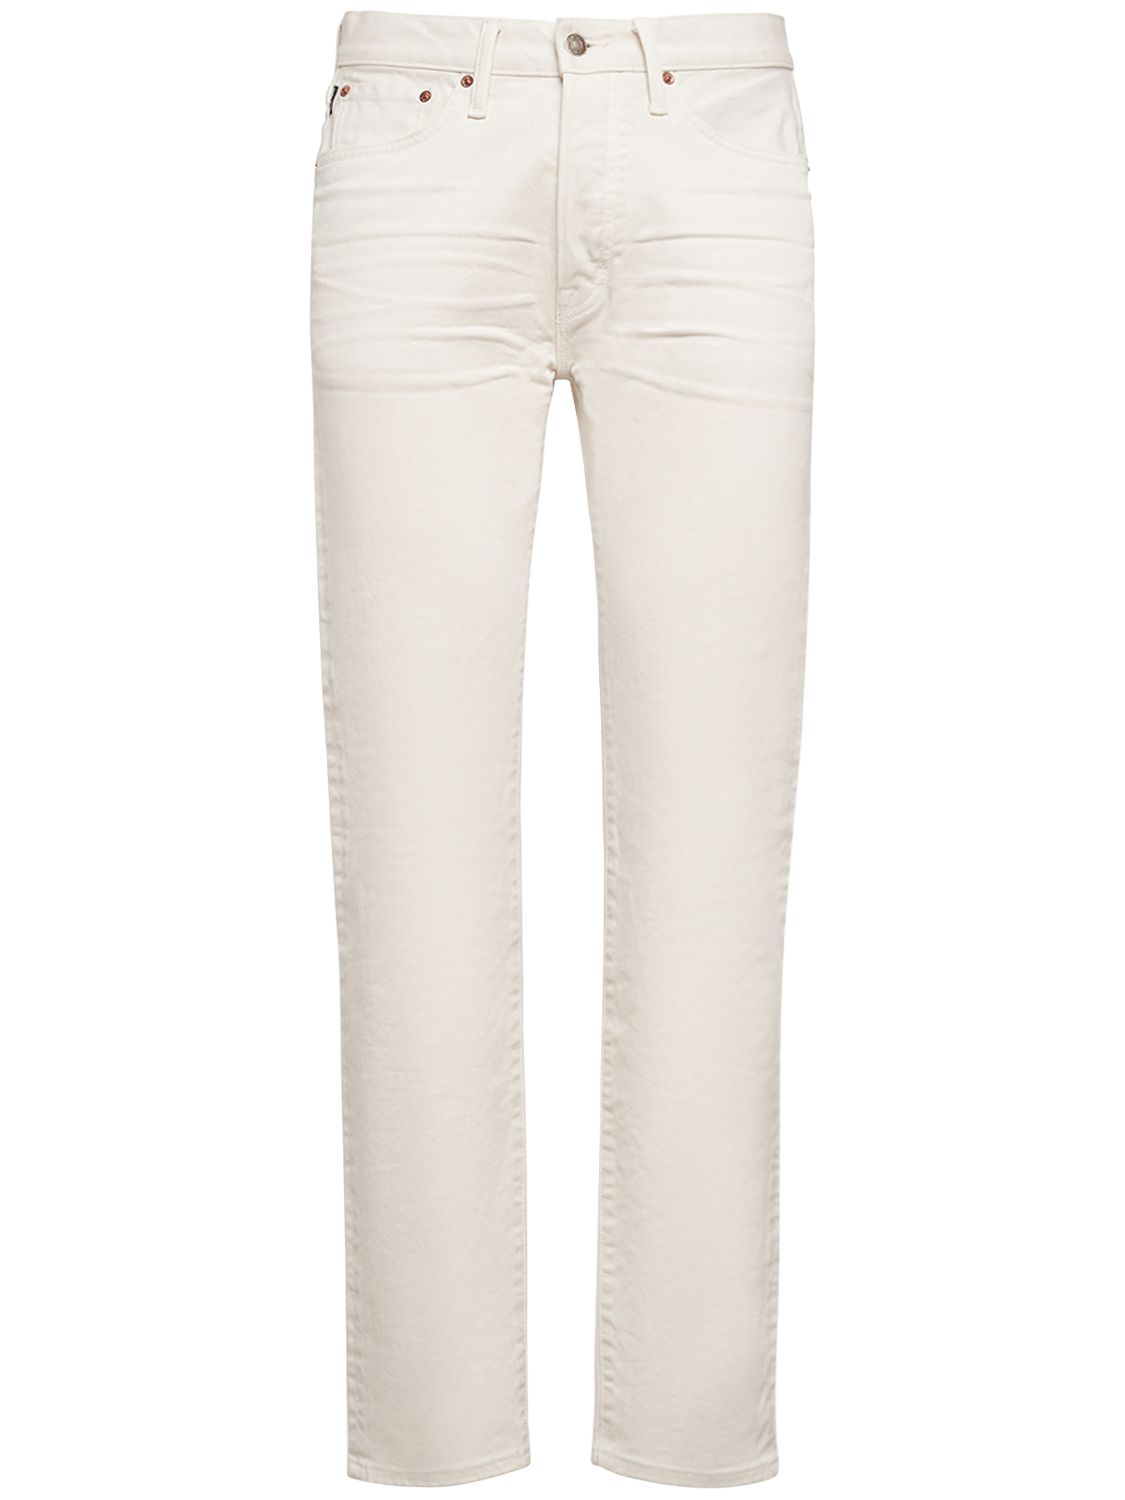 Image of Standard Fit Twill Denim Jeans